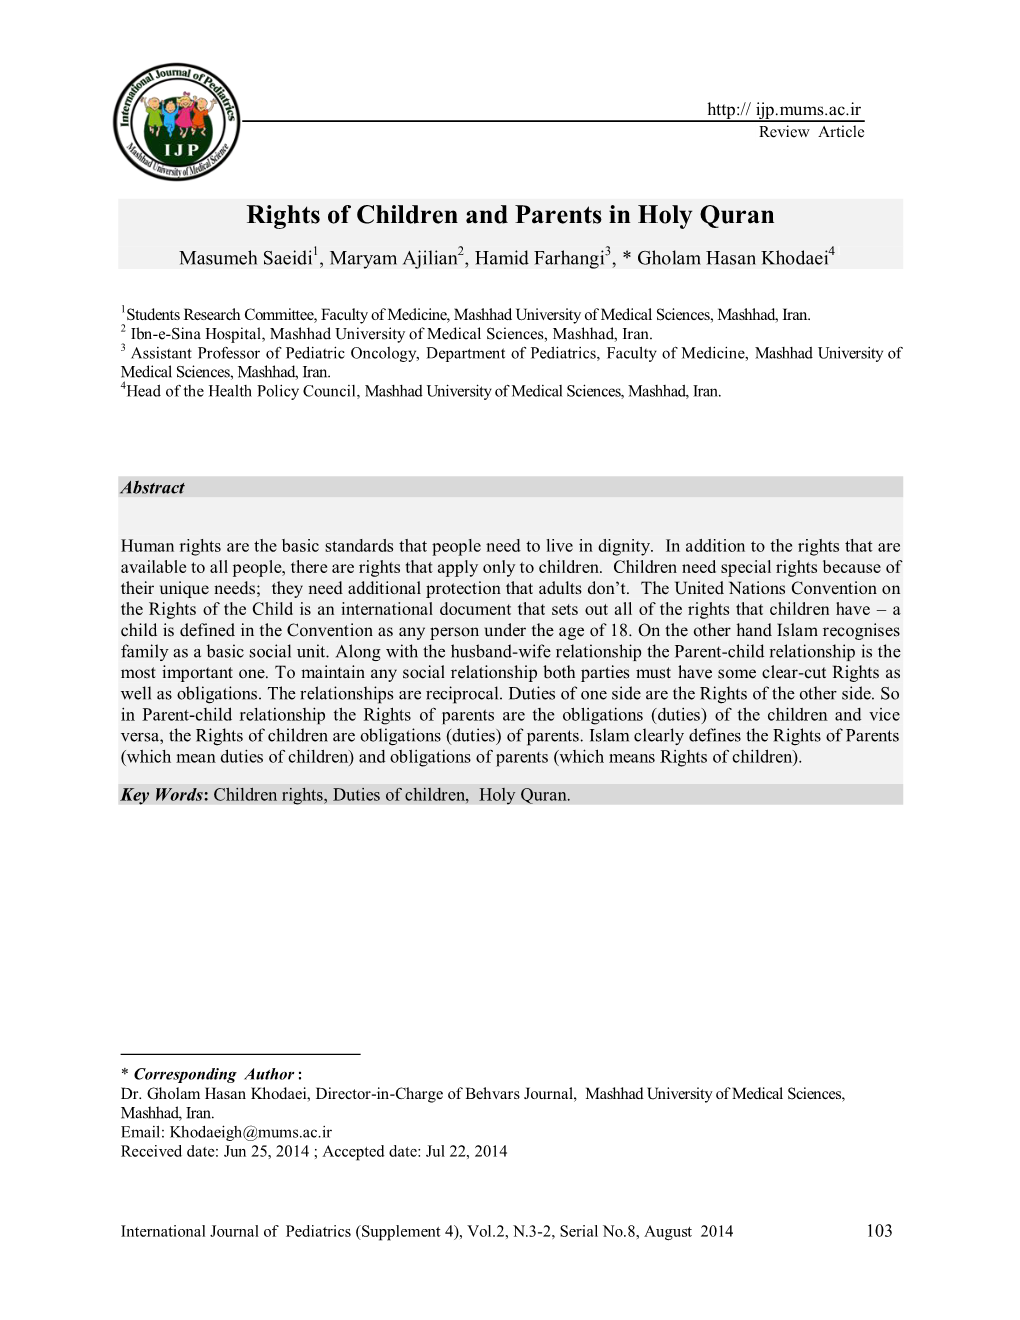 Rights of Children and Parents in Holy Quran Masumeh Saeidi1, Maryam Ajilian2, Hamid Farhangi3, * Gholam Hasan Khodaei41